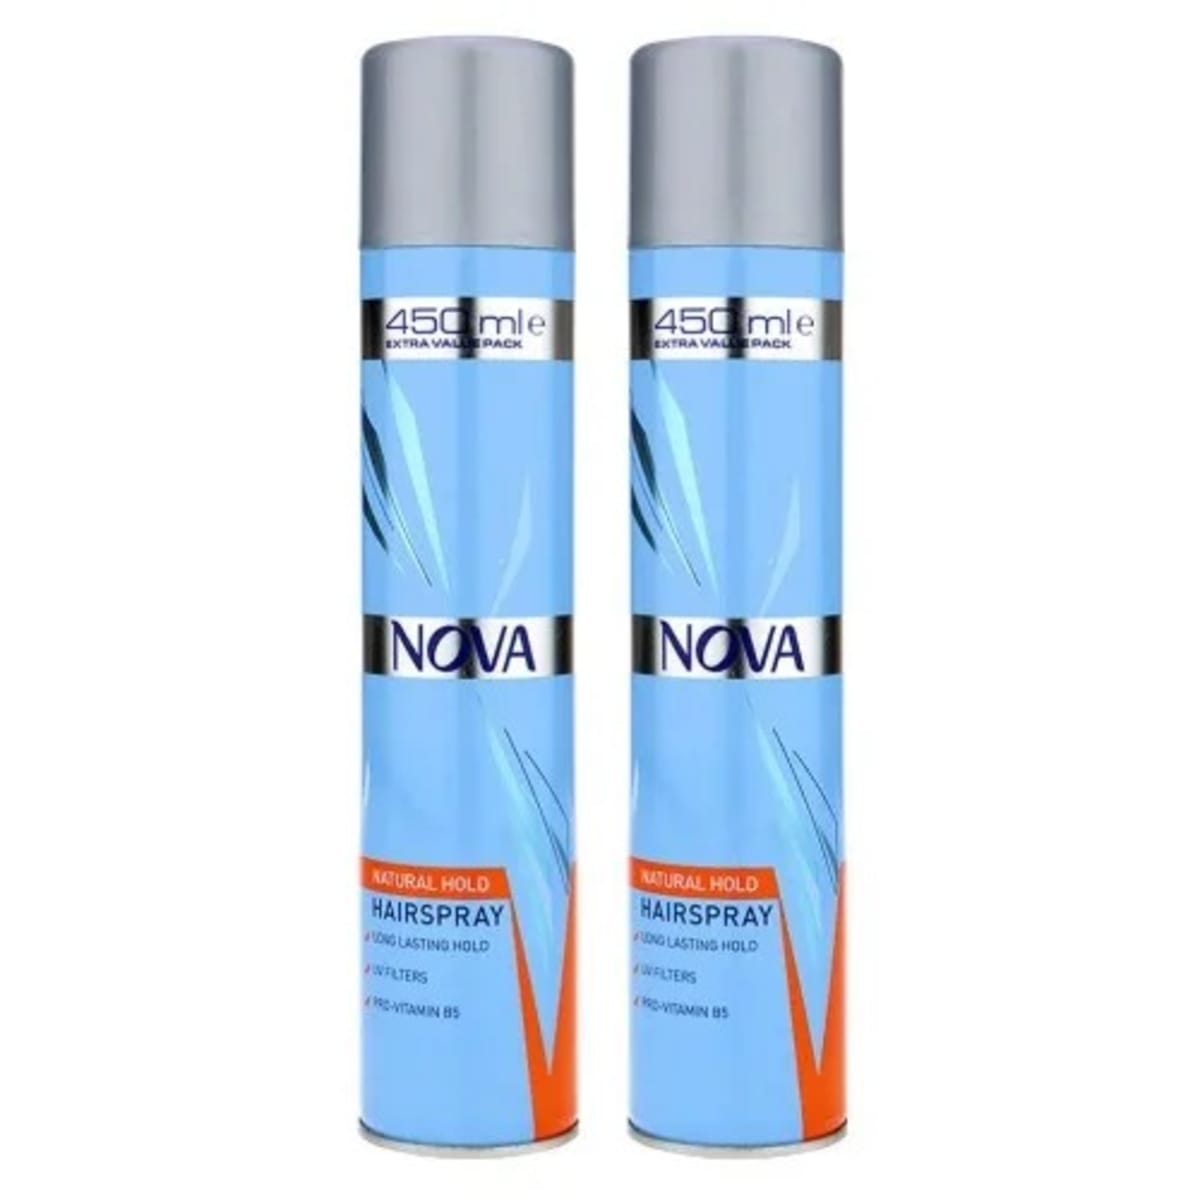 Nova Blue Extra Hold Long Lasting Hair Spray - (450ml)